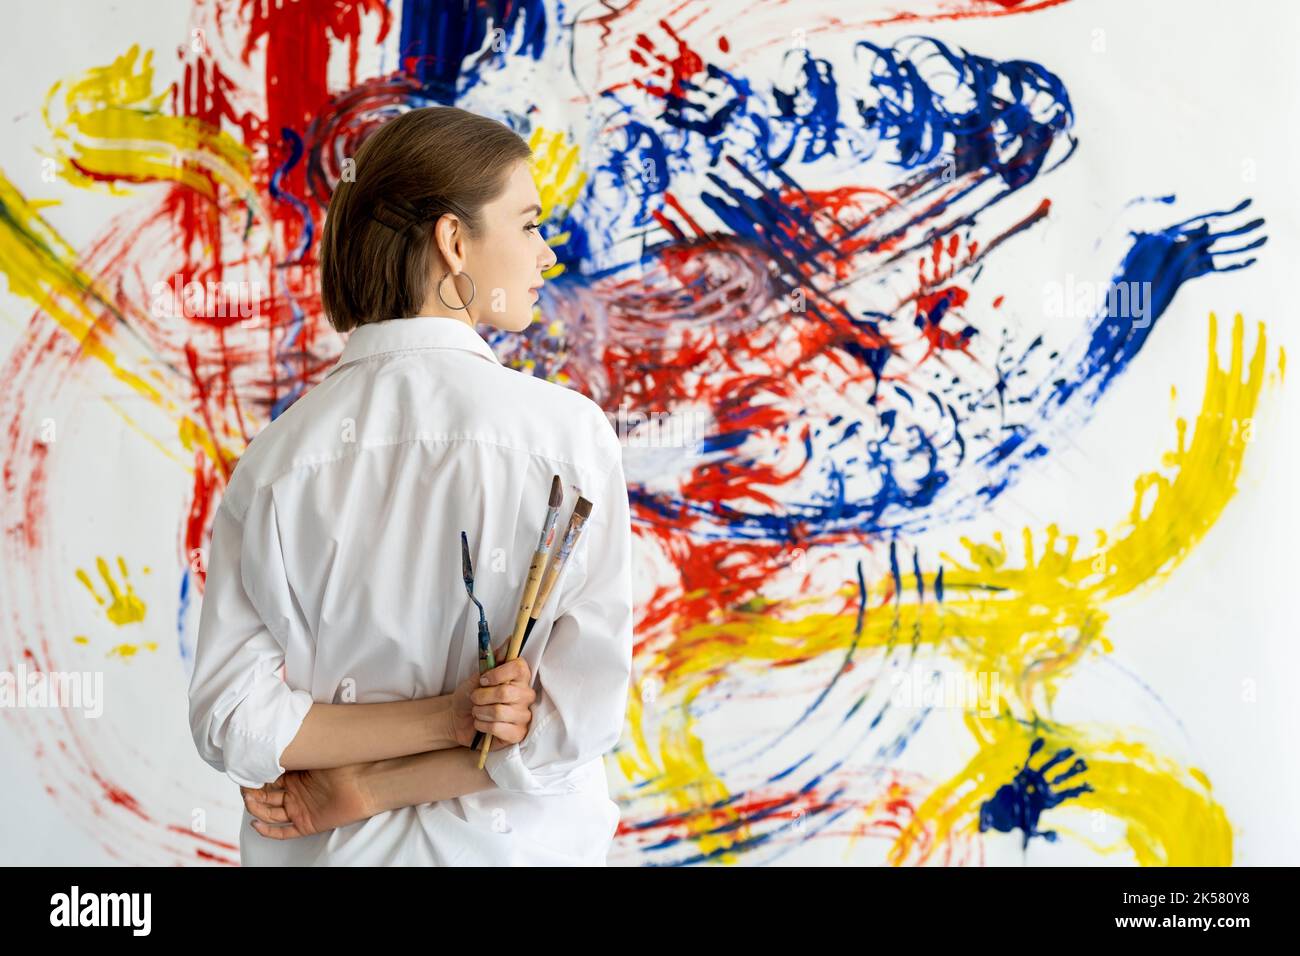 Kunst Therapie Hand Malerei Frau mit bunten Wand Stockfoto